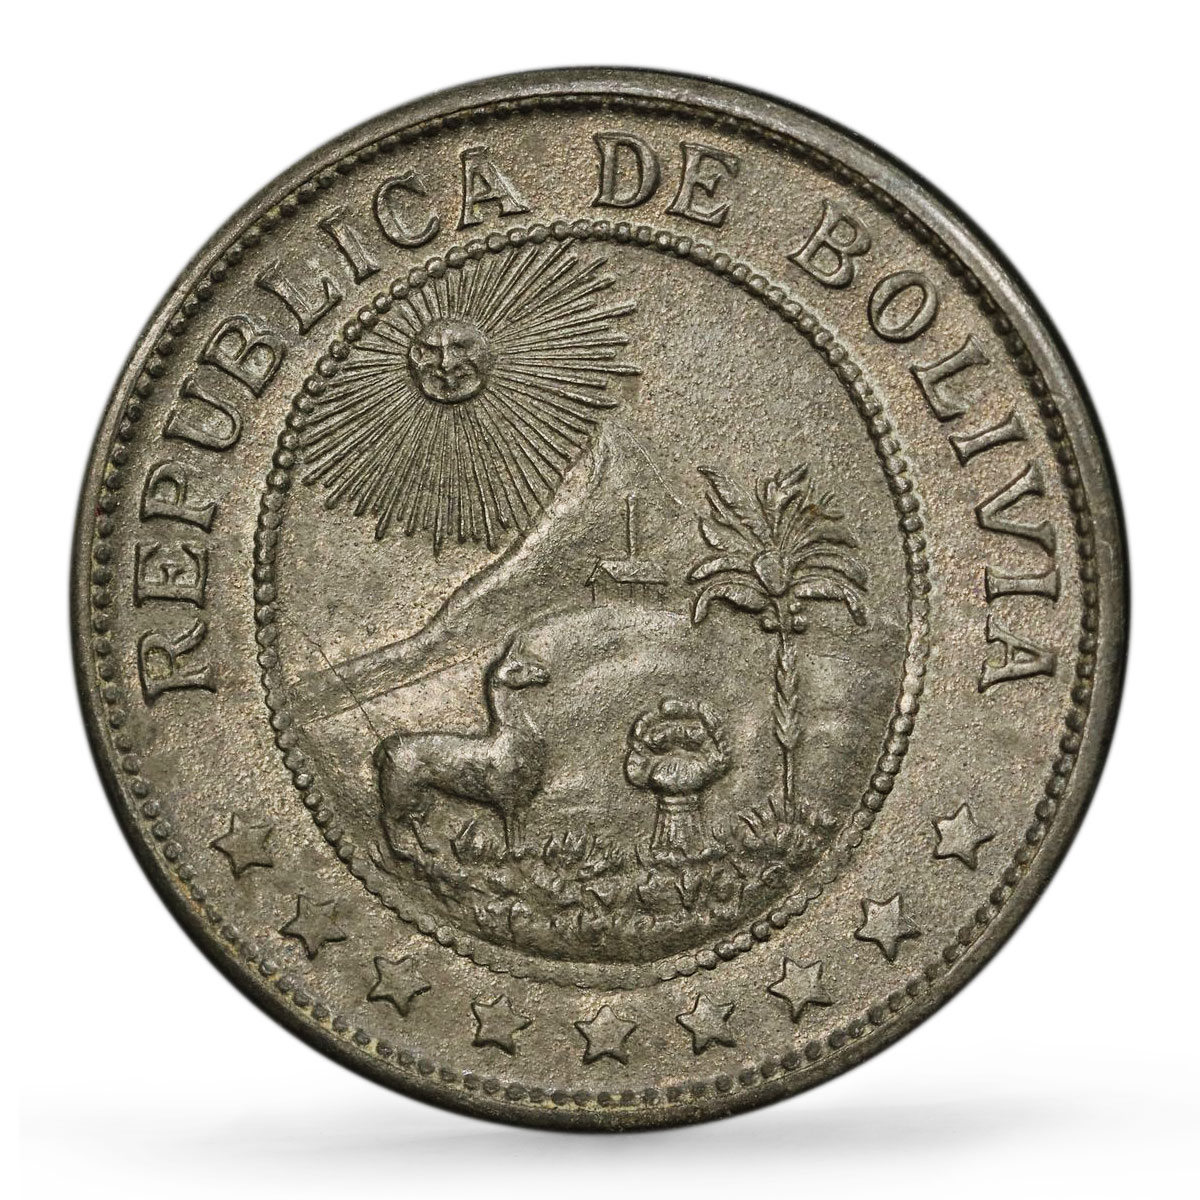 Bolivia 20 centavos Regular Coinage Lama Palm Tree KM-183 MS63 PCGS Zn coin 1942